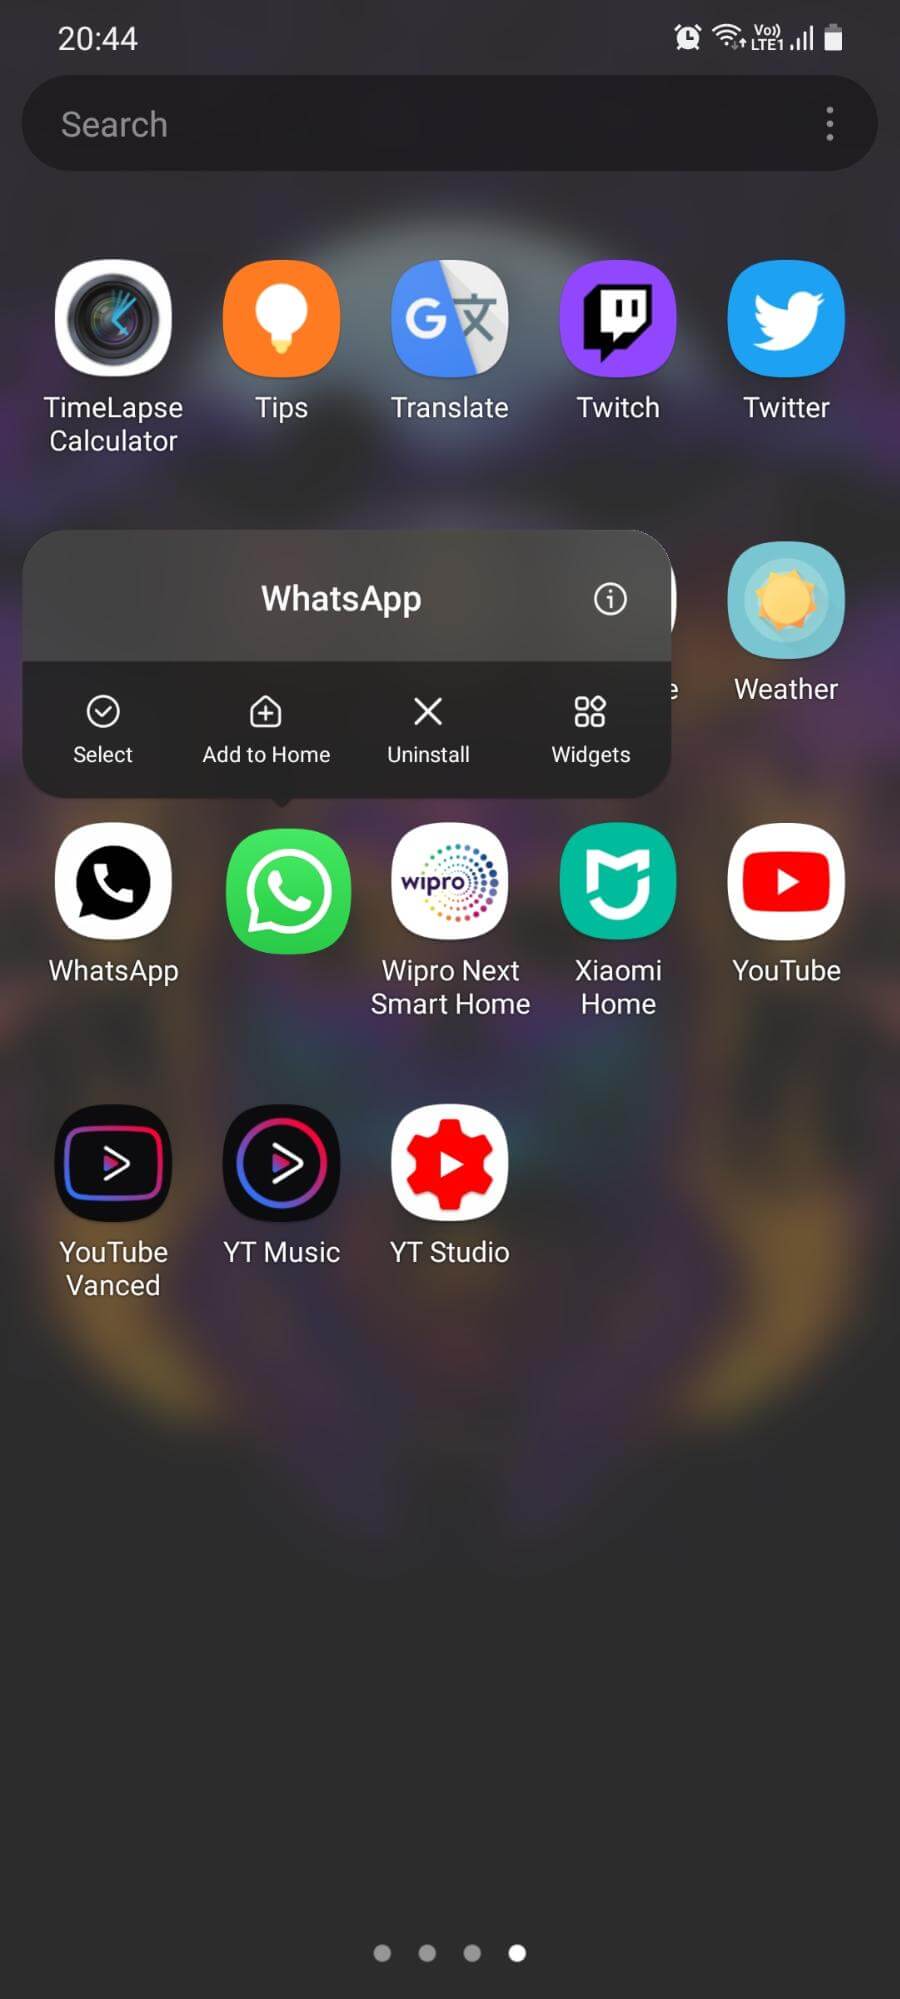 NS Whatsapp app